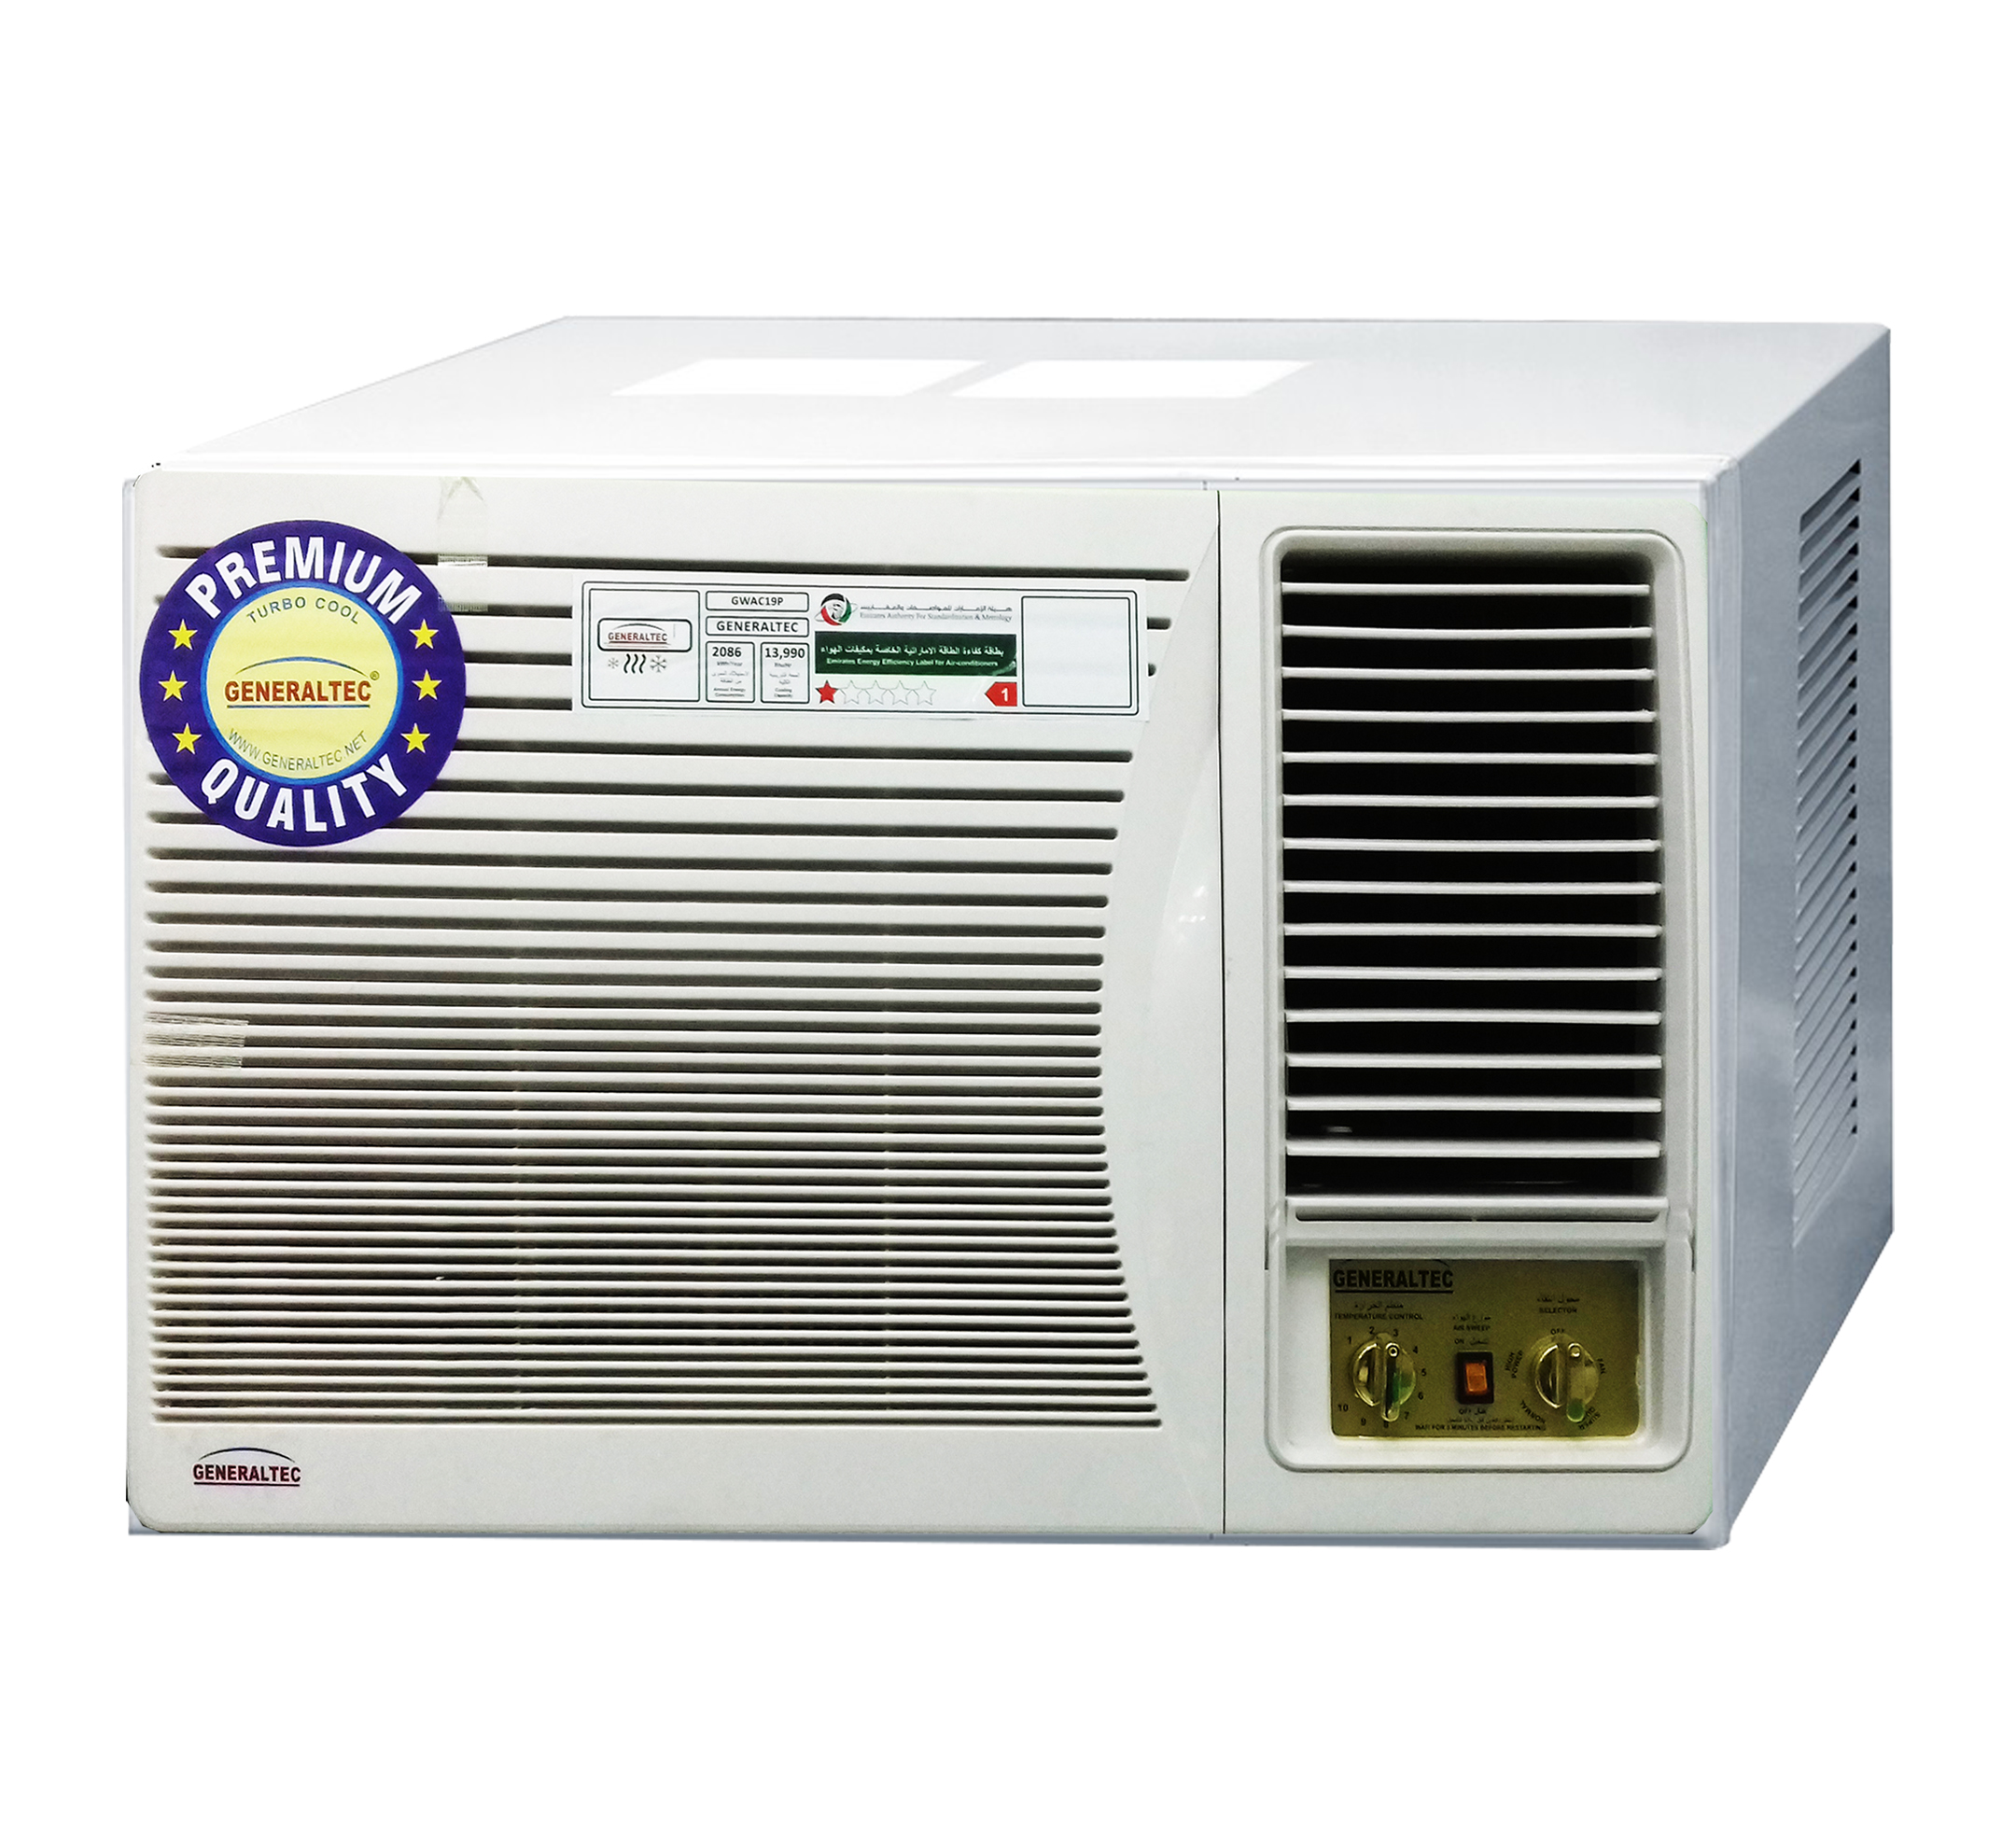 Generaltec Window Air Conditioner 2 TON Model No. GWAC25P (Piston Type Compressor)